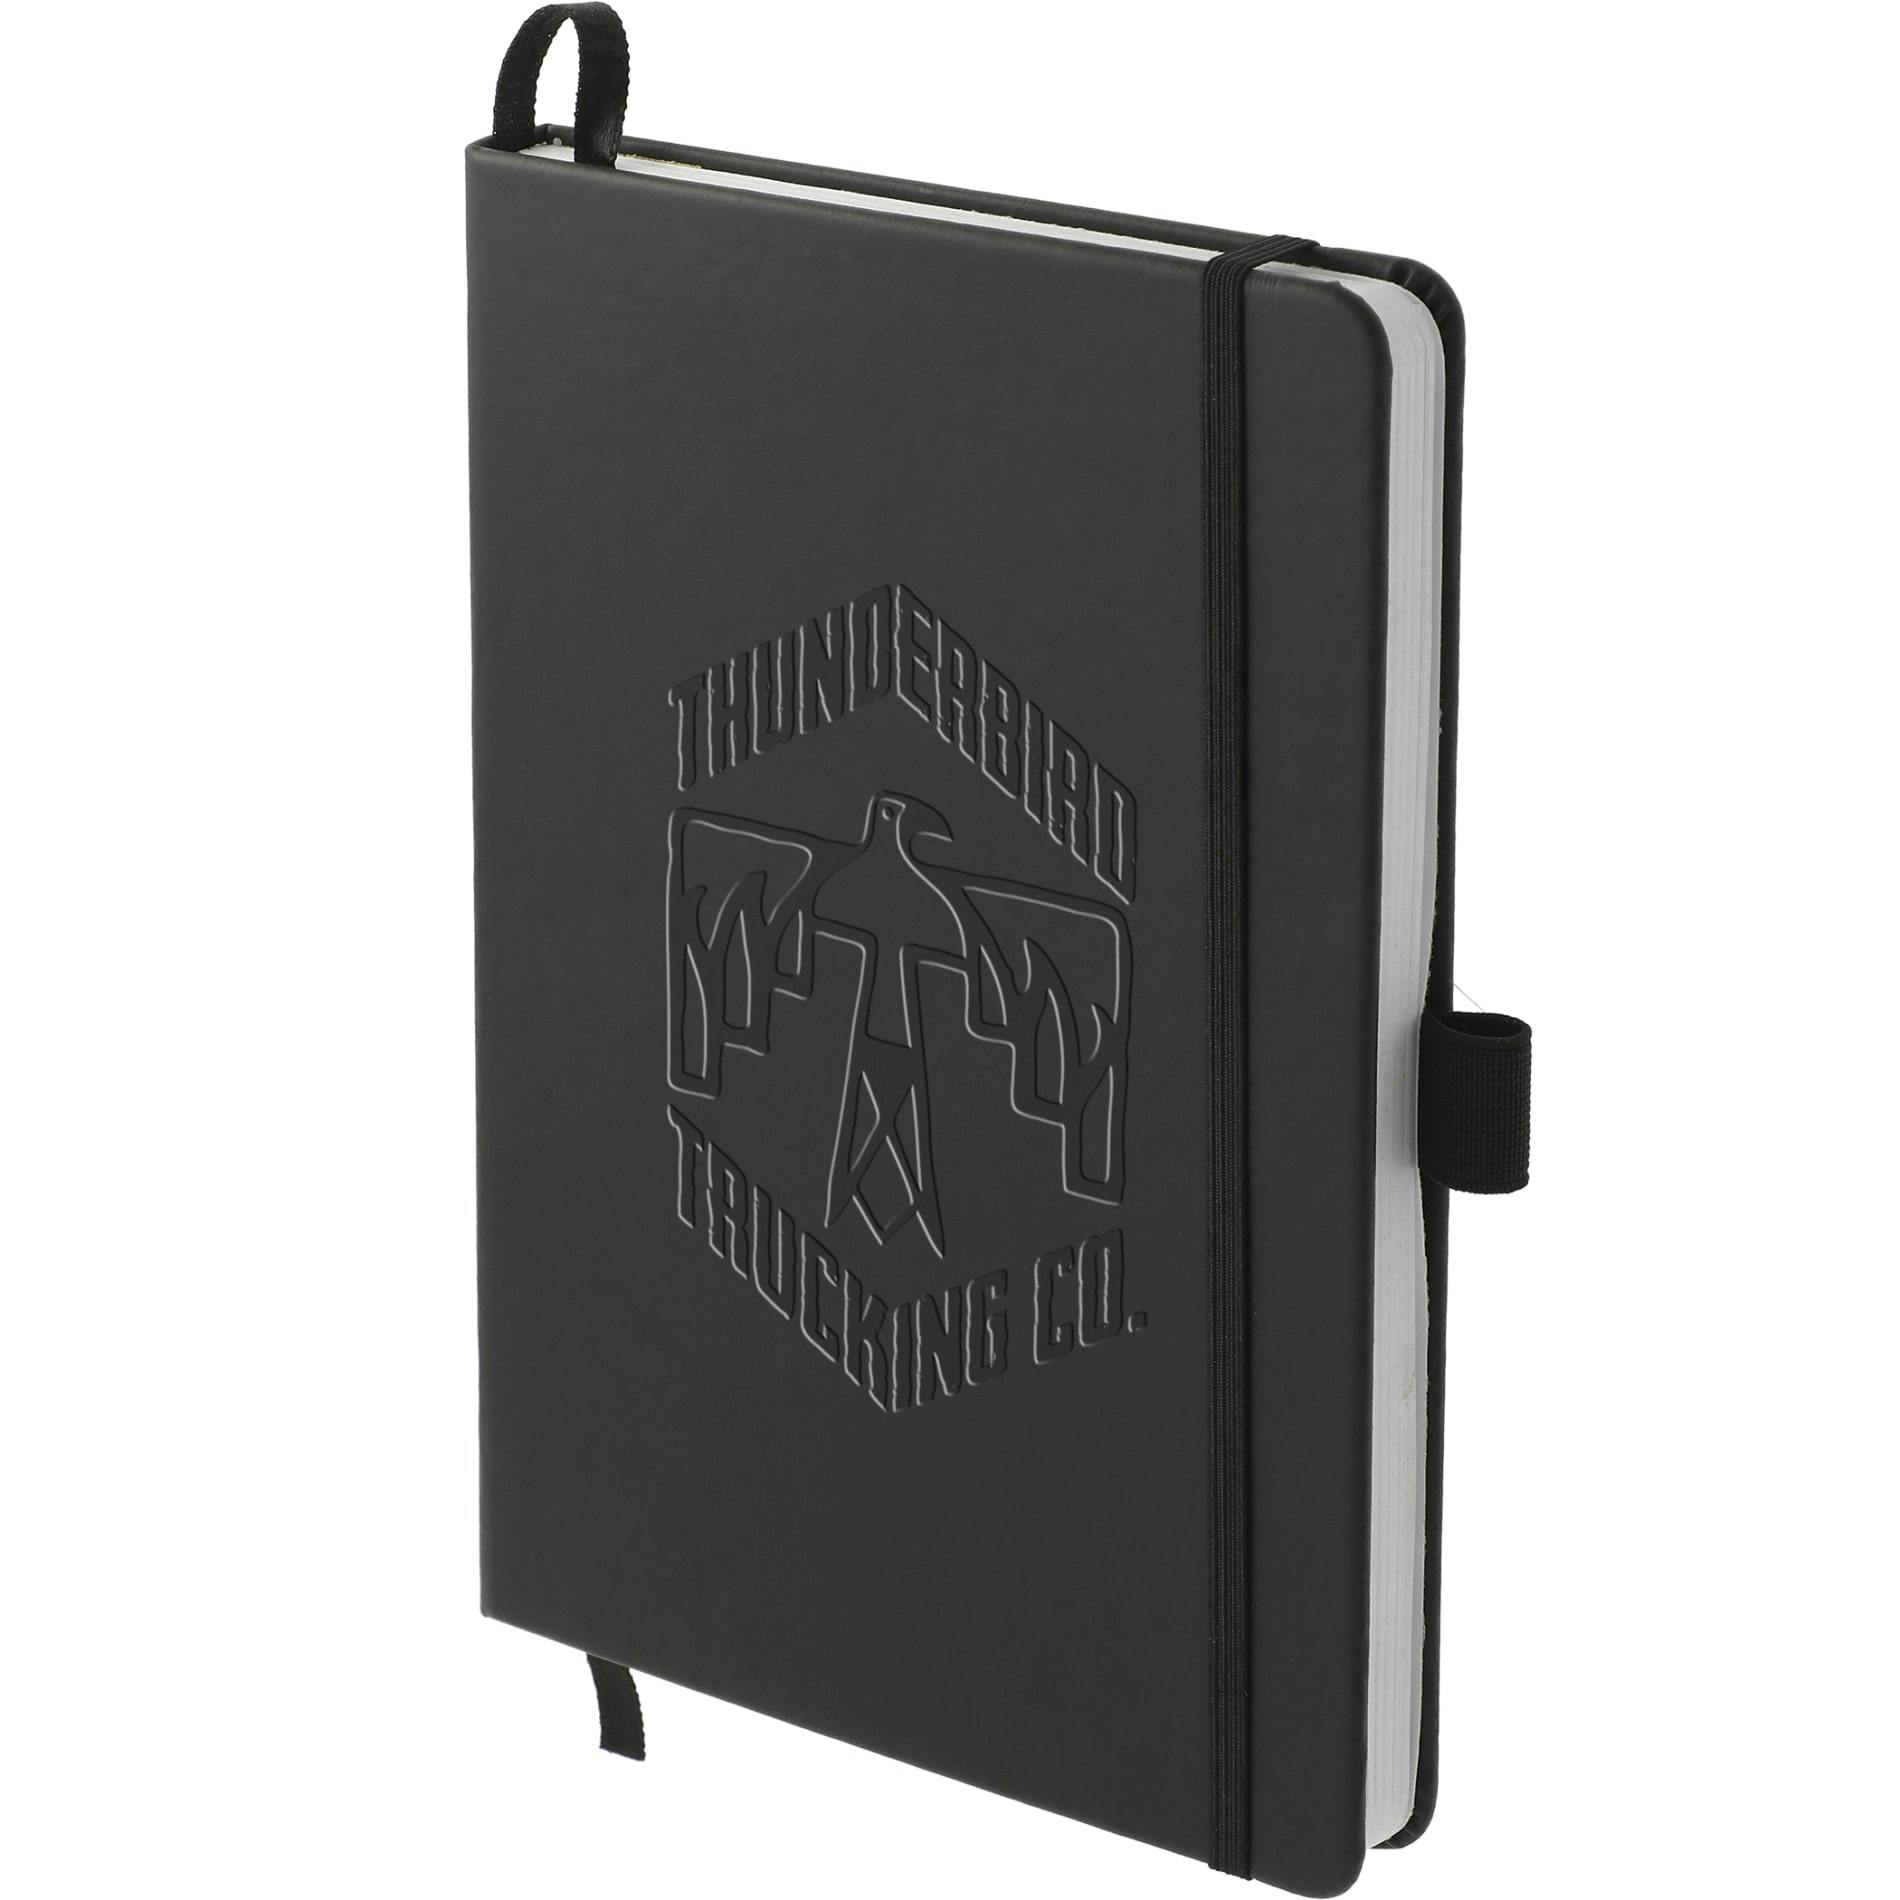 5.5” x 8.5” Mela Bound JournalBook ® - additional Image 1